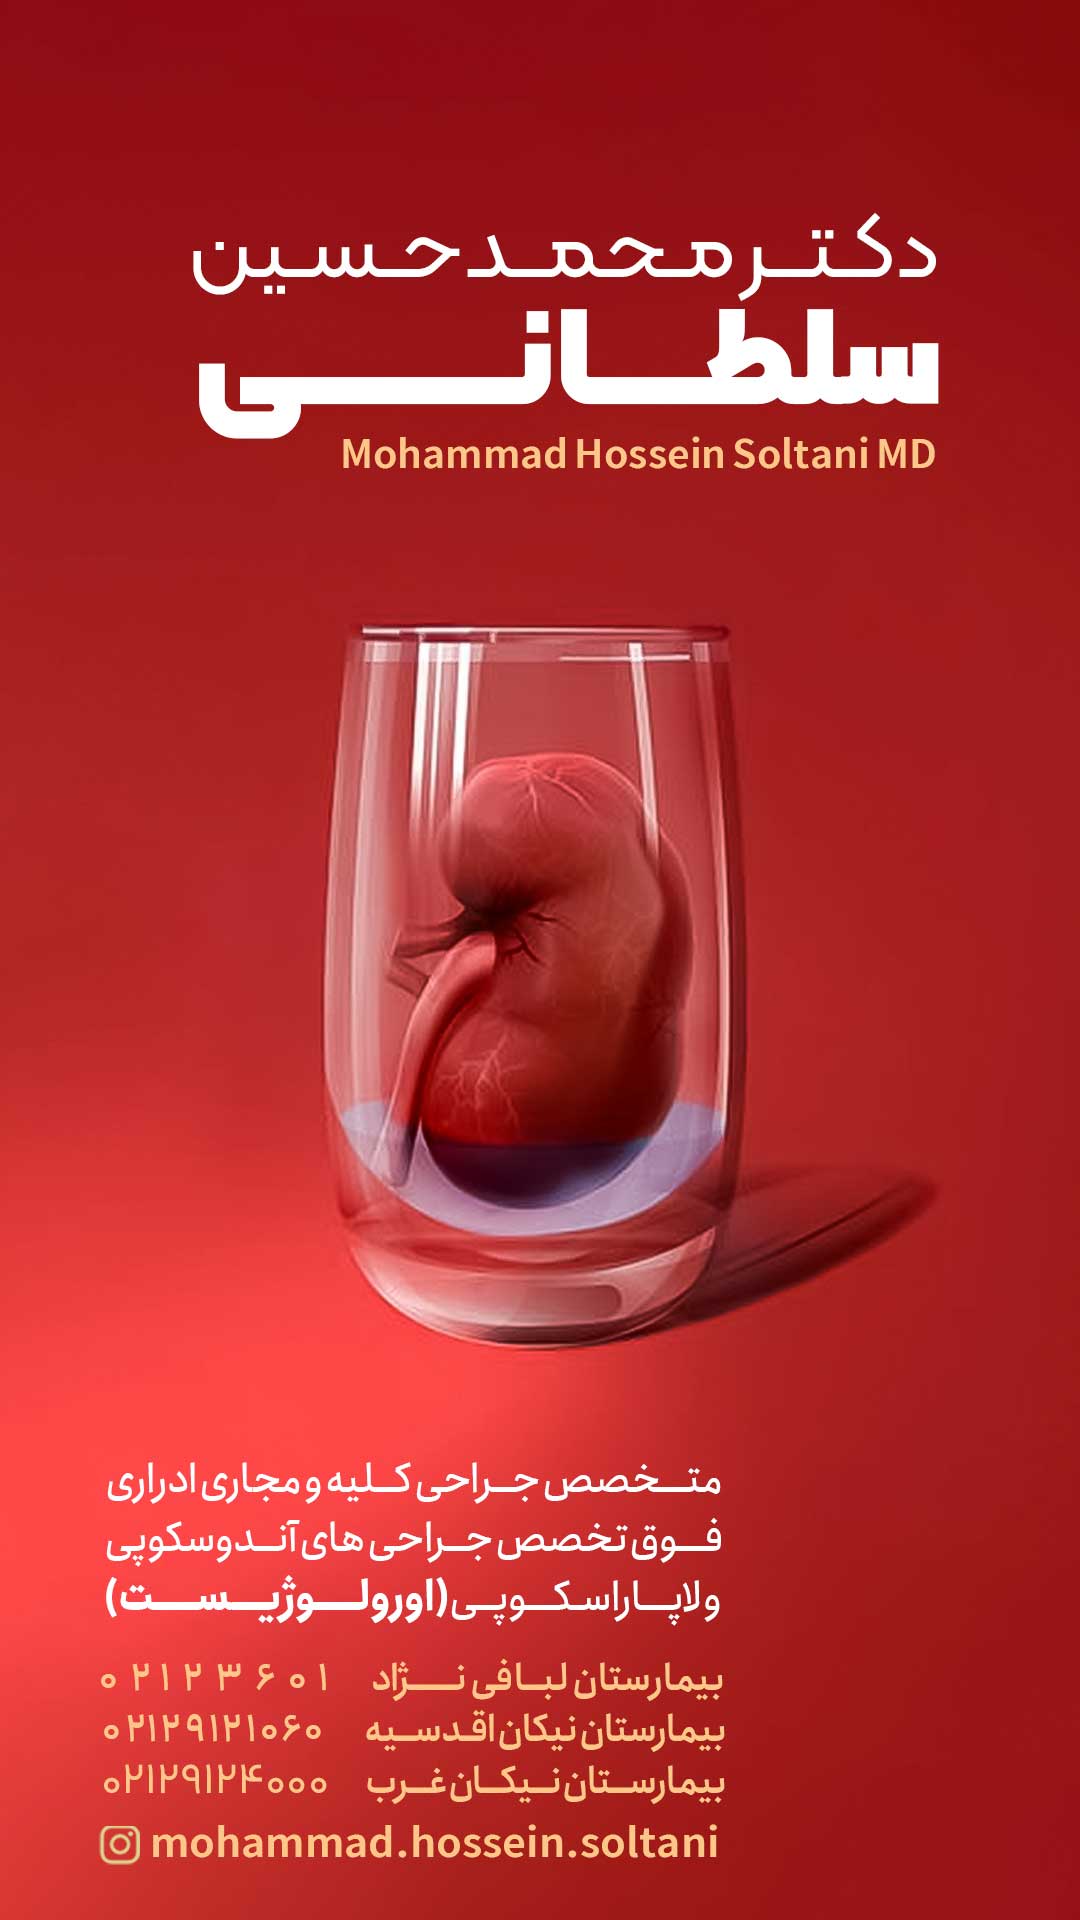 Dr-Mohammad-Hossein-Sultani-Urinary-Tract-Specialist--Urologist-in-tehran7